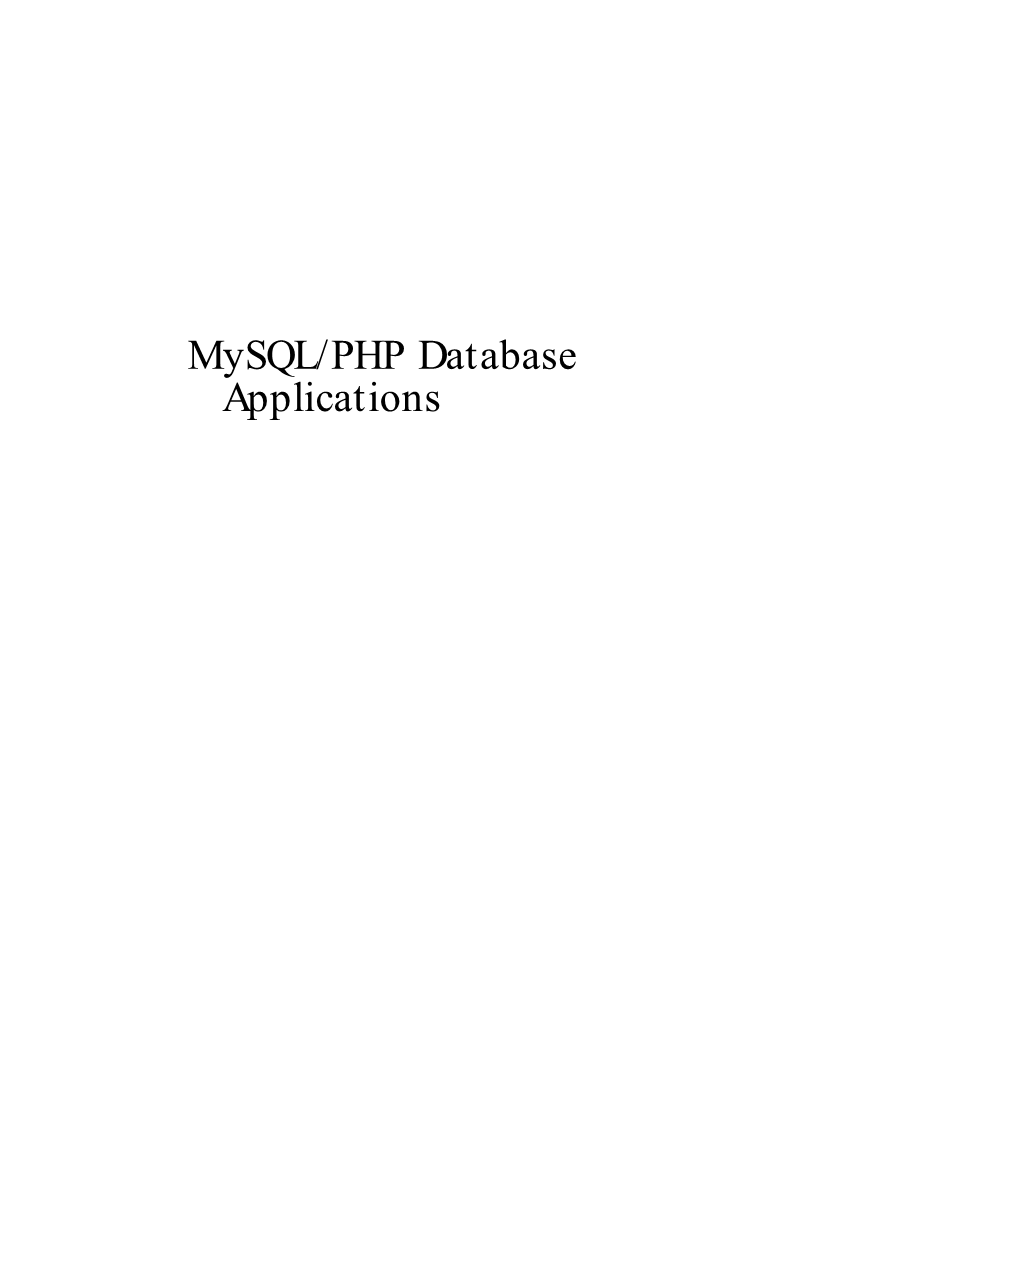 Mysql/PHP Database Applications 3537-4 FM.F.Qc 12/15/00 15:31 Page Ii 3537-4 FM.F.Qc 12/15/00 15:31 Page Iii